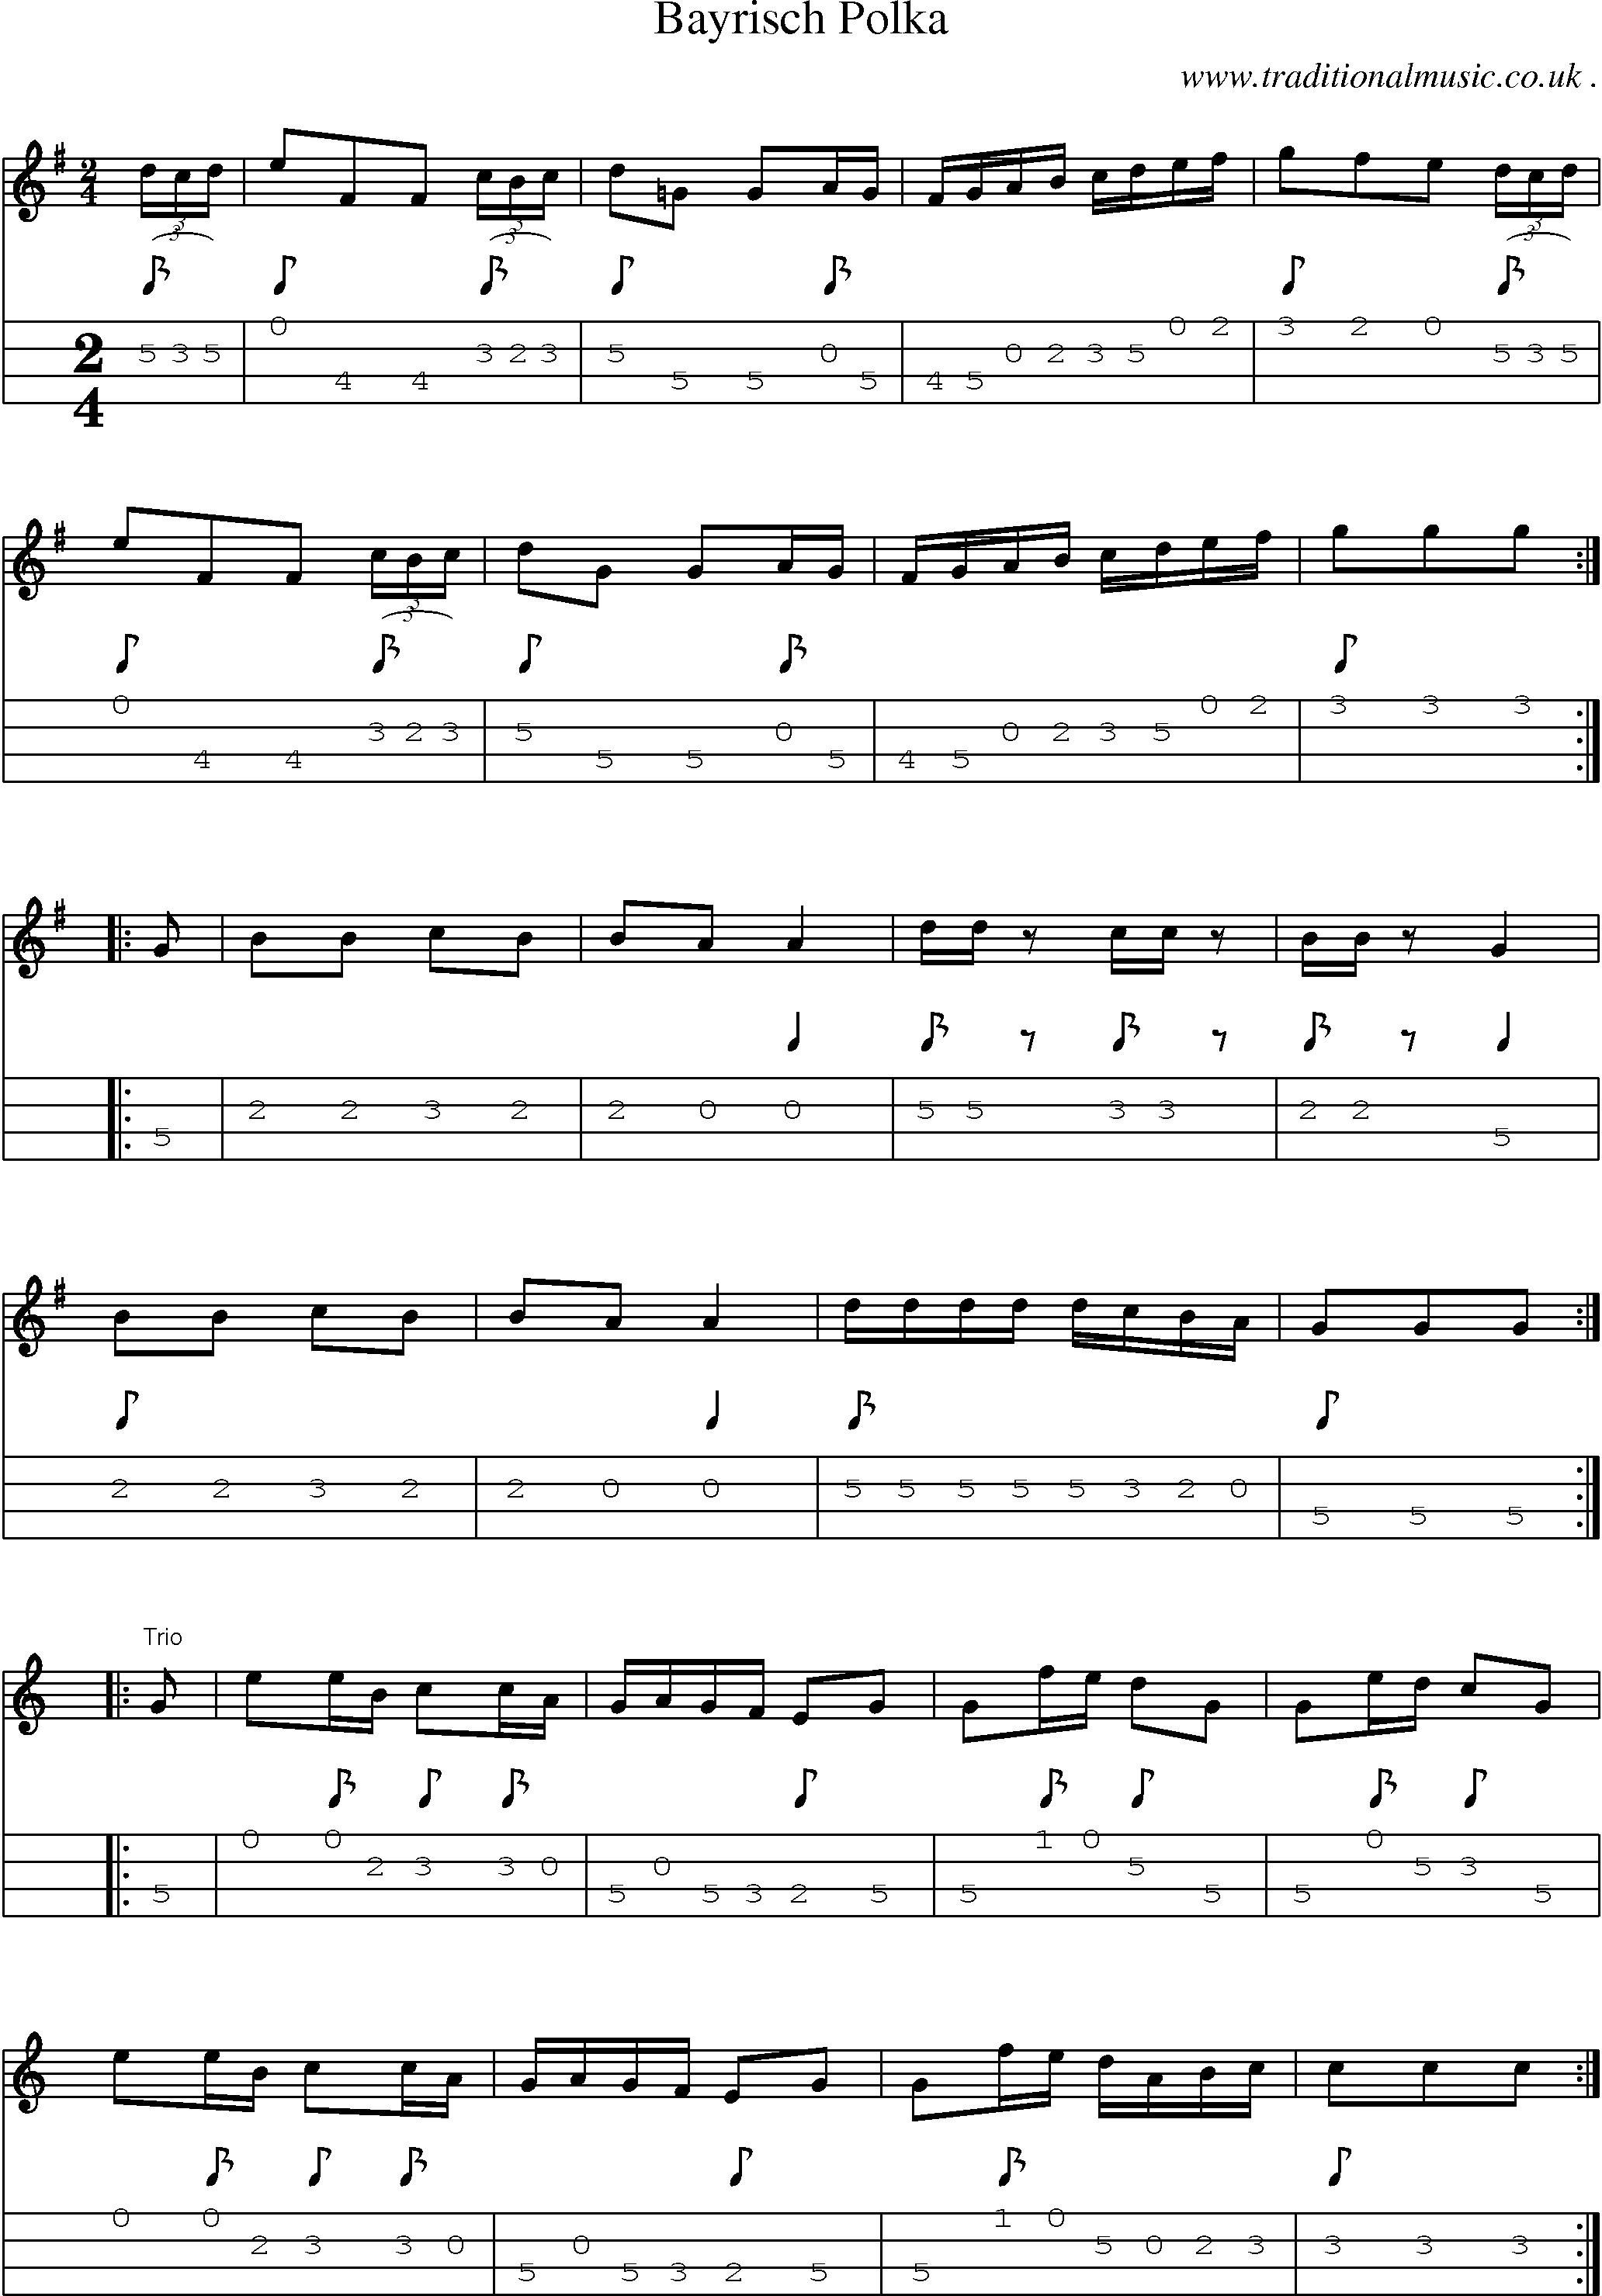 Sheet-Music and Mandolin Tabs for Bayrisch Polka